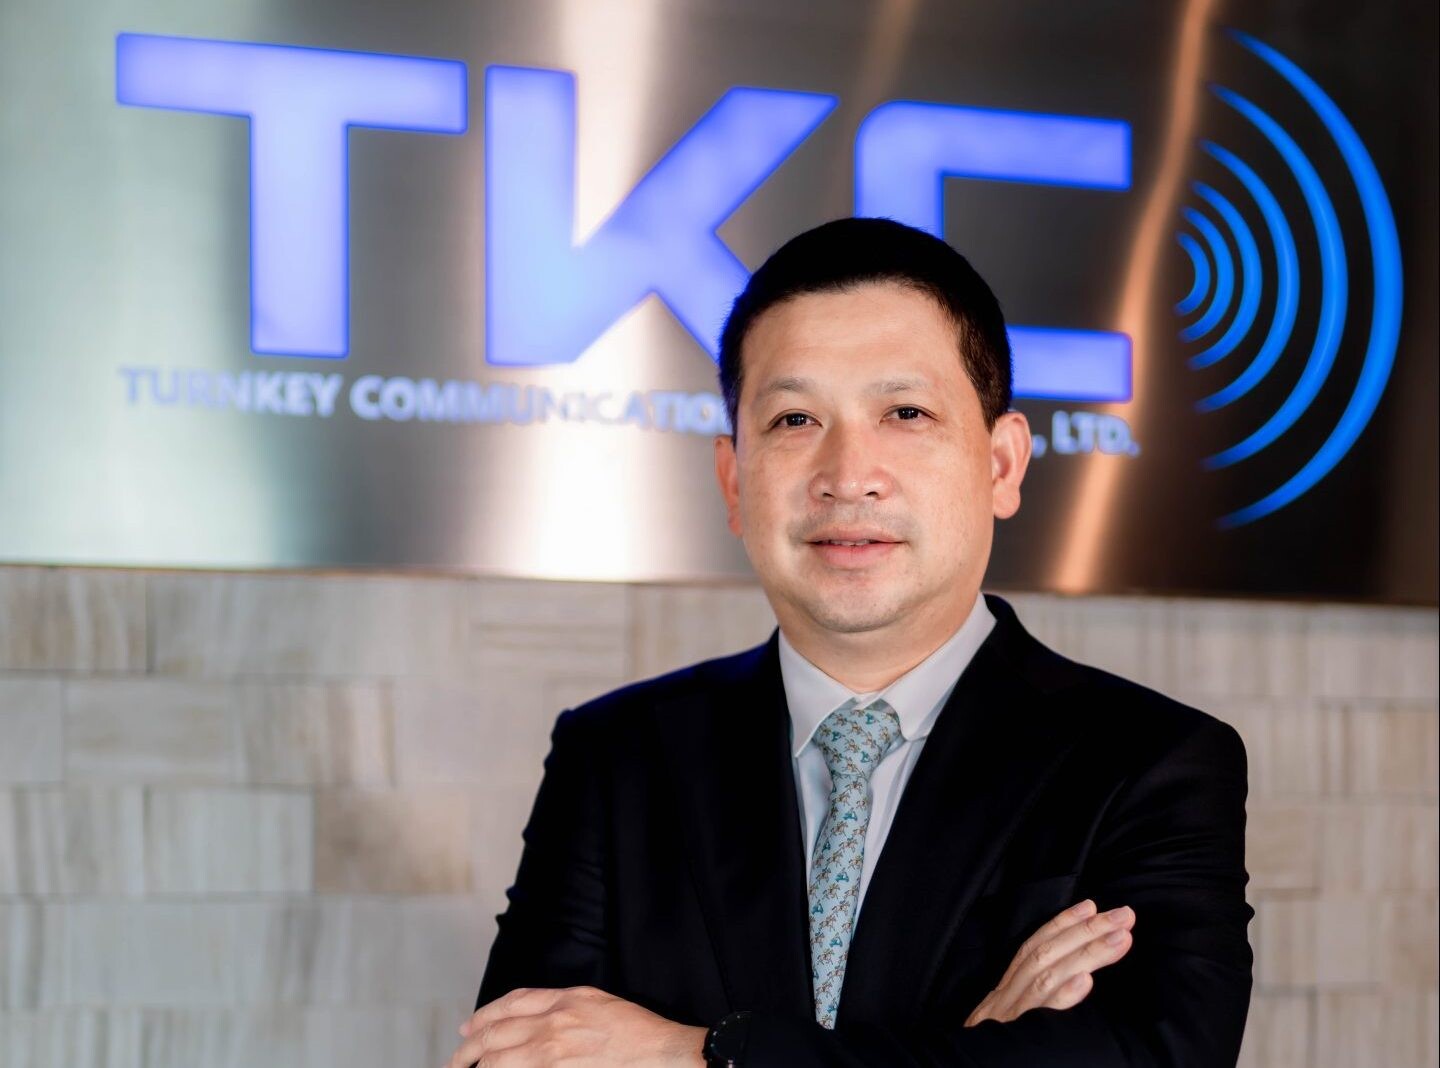 "TKC" จัดโรดโชว์ออนไลน์ 15 ธันวาคมนี้ ก่อนขาย IPO ชูความโดดเด่น หุ้นสายเทคฯ วางระบบและให้บริการโทรคมนาคม